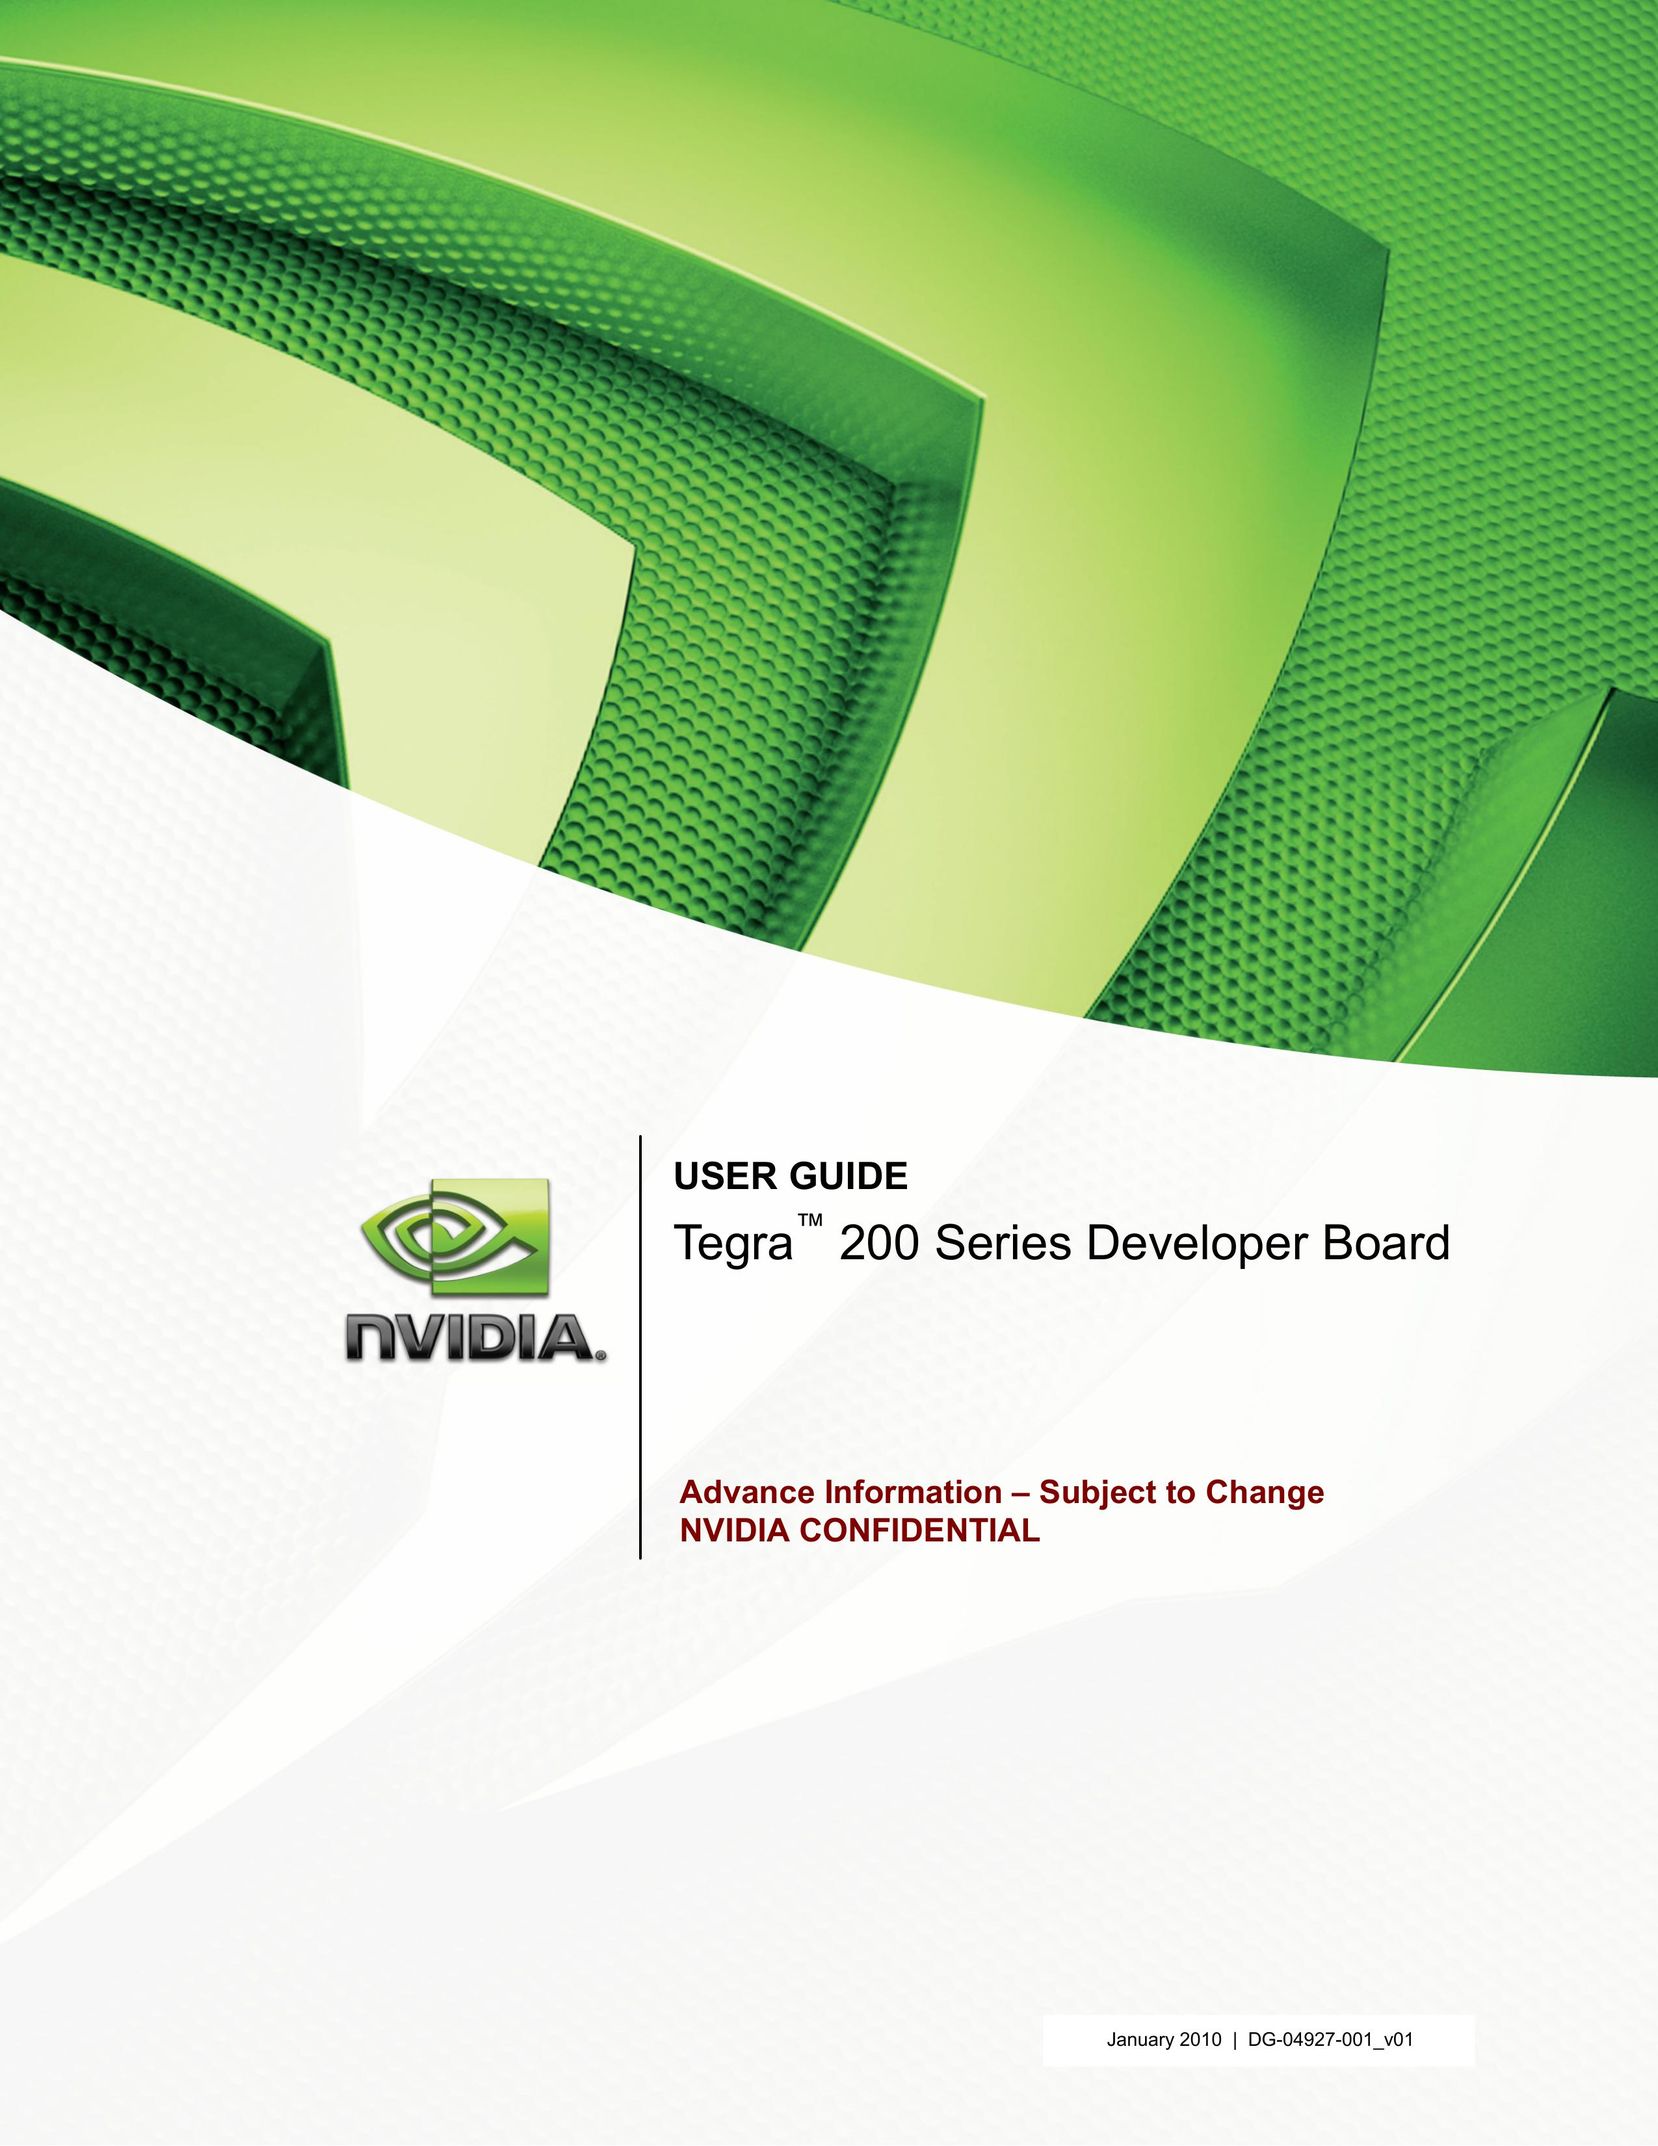 Nvidia DG-04927-001_V01 Computer Hardware User Manual